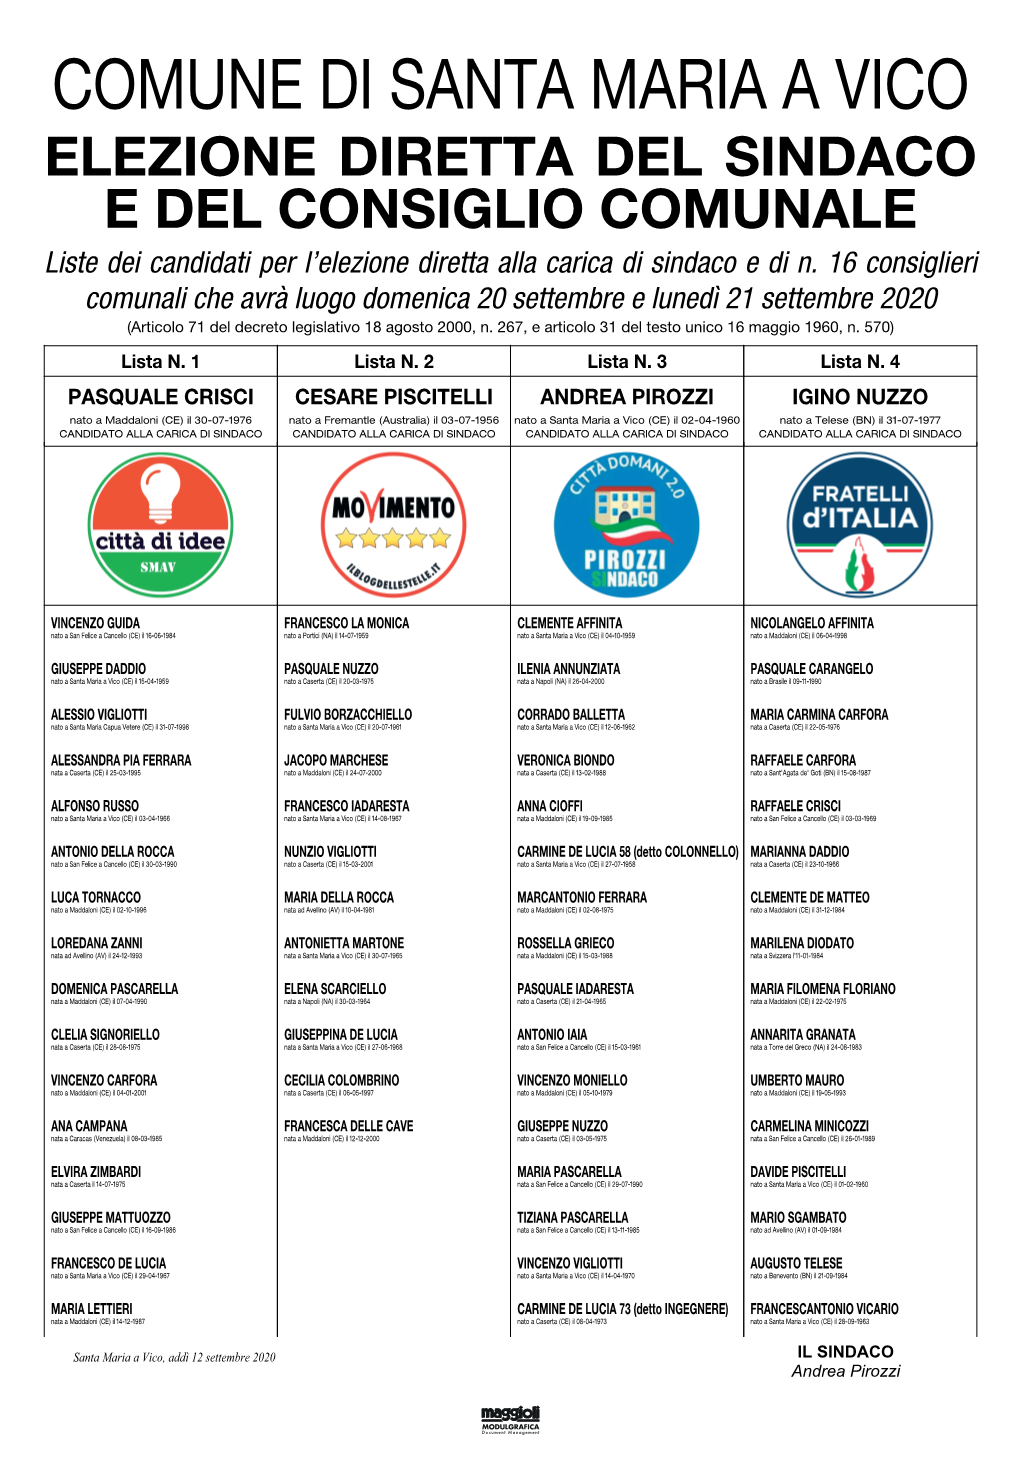 Liste Dei Candidati Per L'elezione Diretta Alla Carica Di Sindaco E Di N